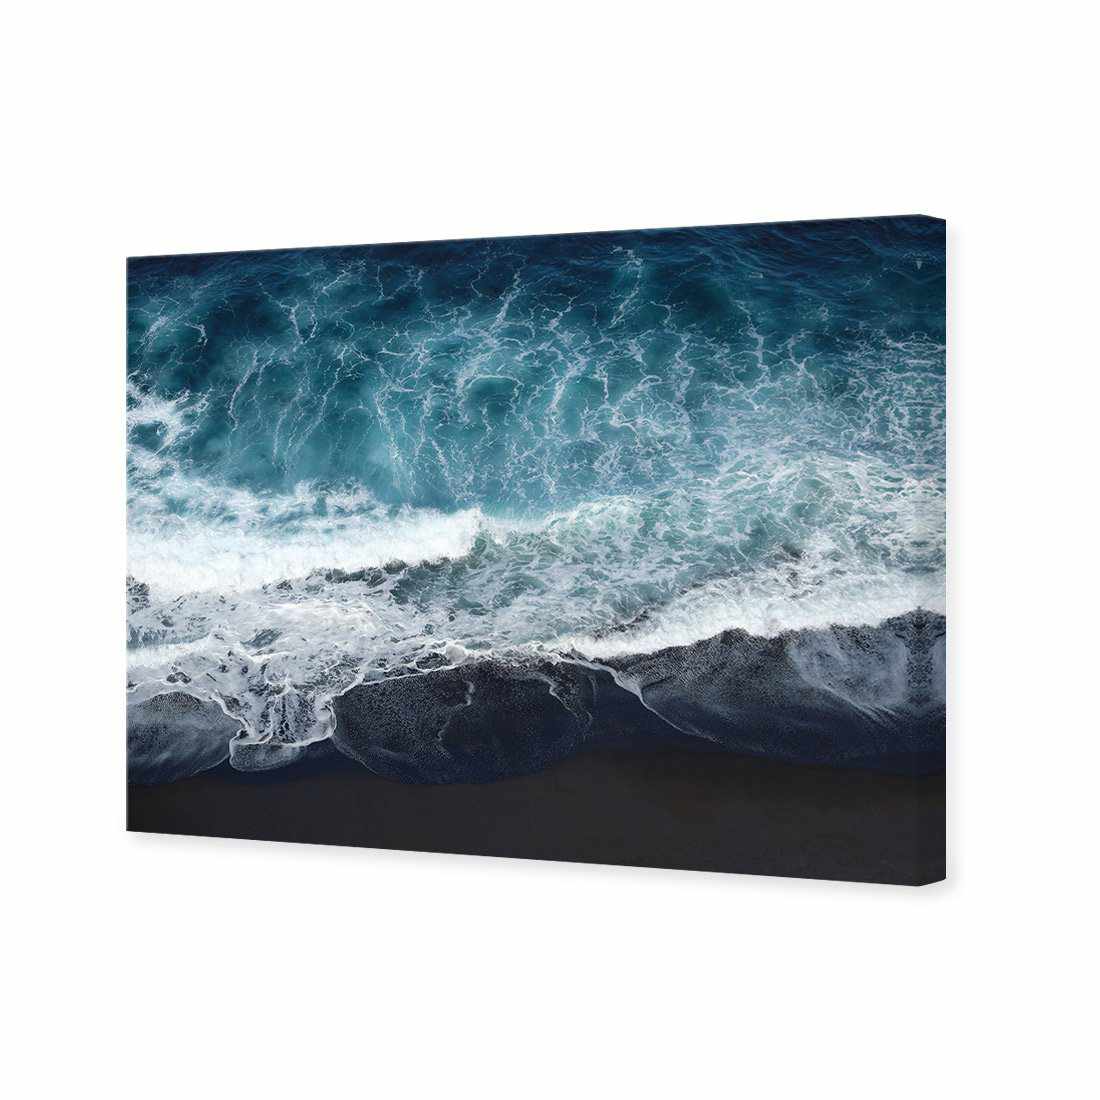 Wave Approaching Canvas Art-Canvas-Wall Art Designs-45x30cm-Canvas - No Frame-Wall Art Designs